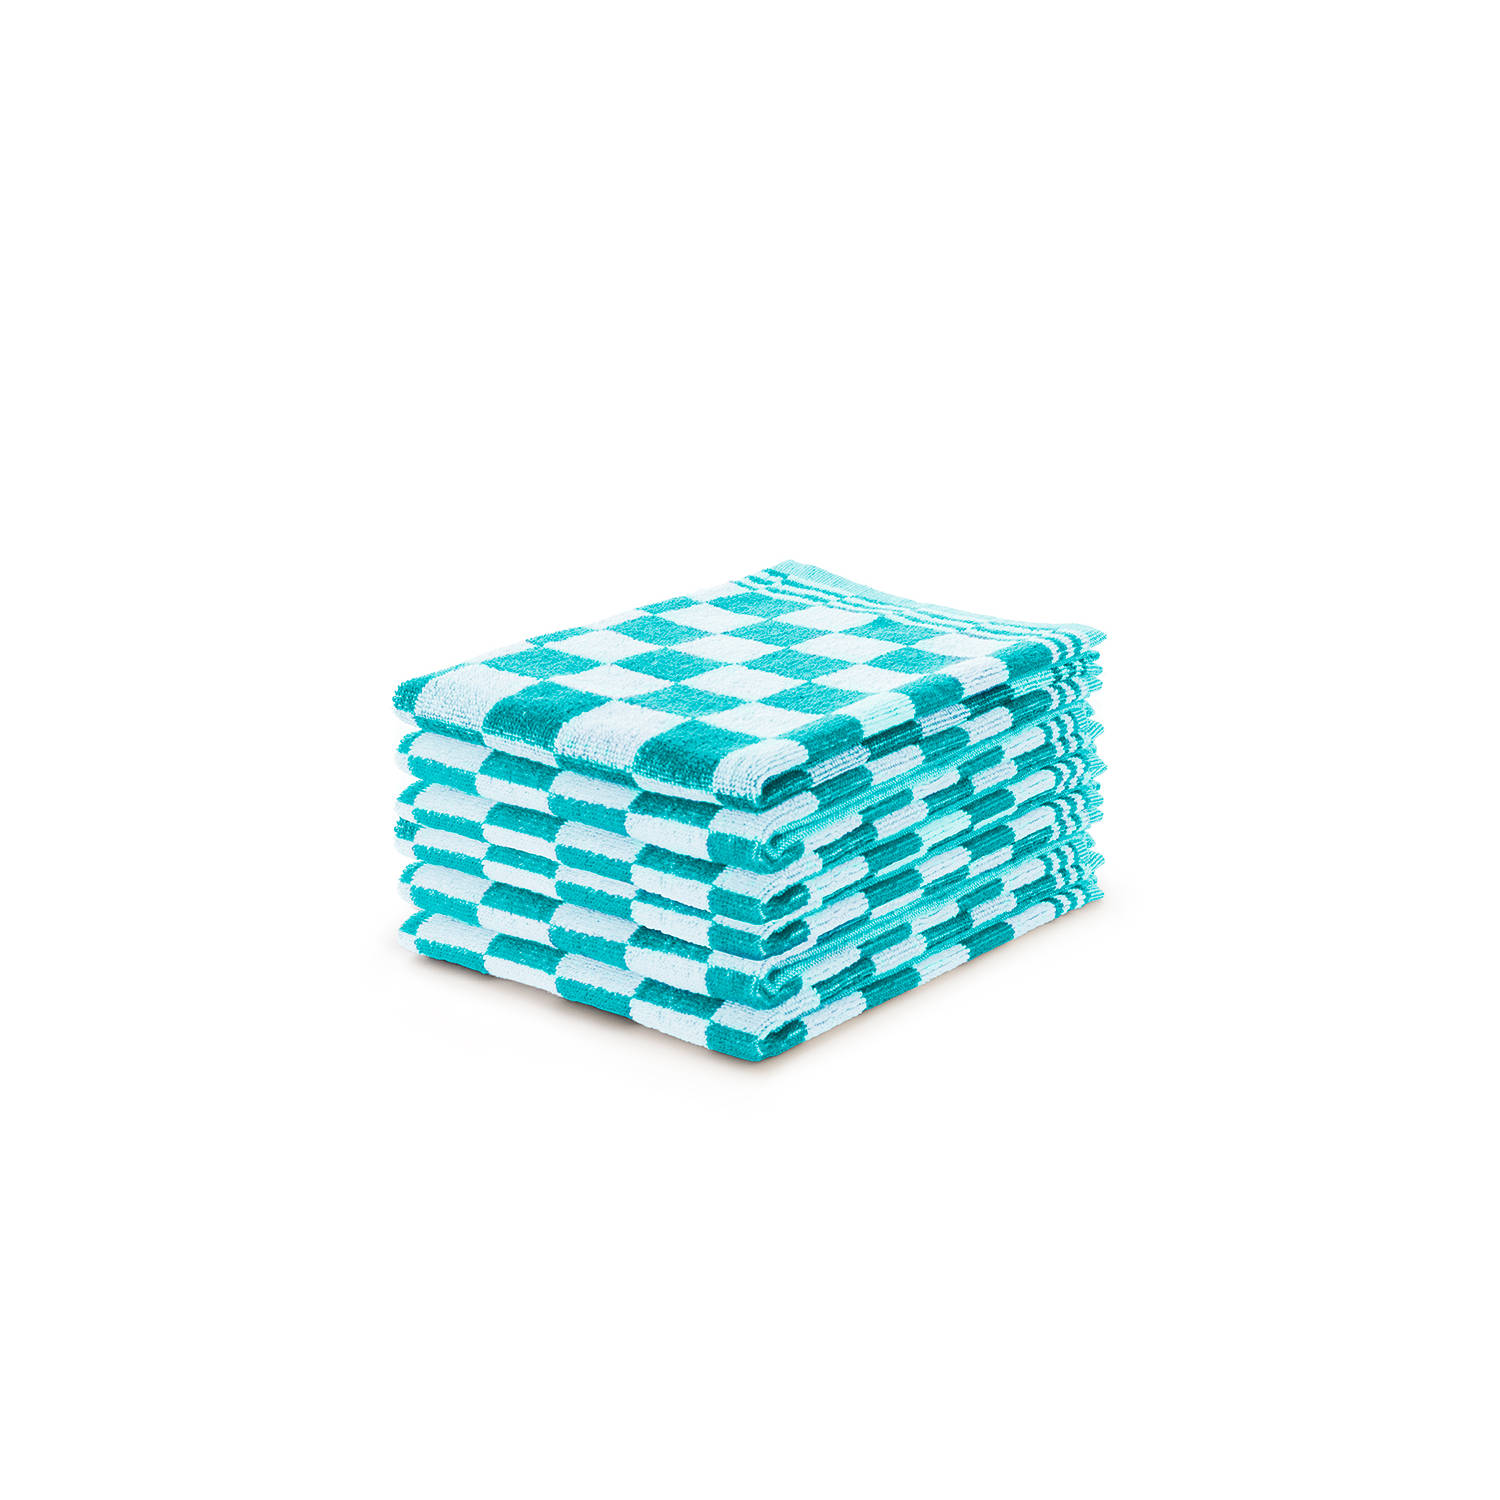 Elegance Keukendoekset Blok 50x50cm - turquoise - set van 6